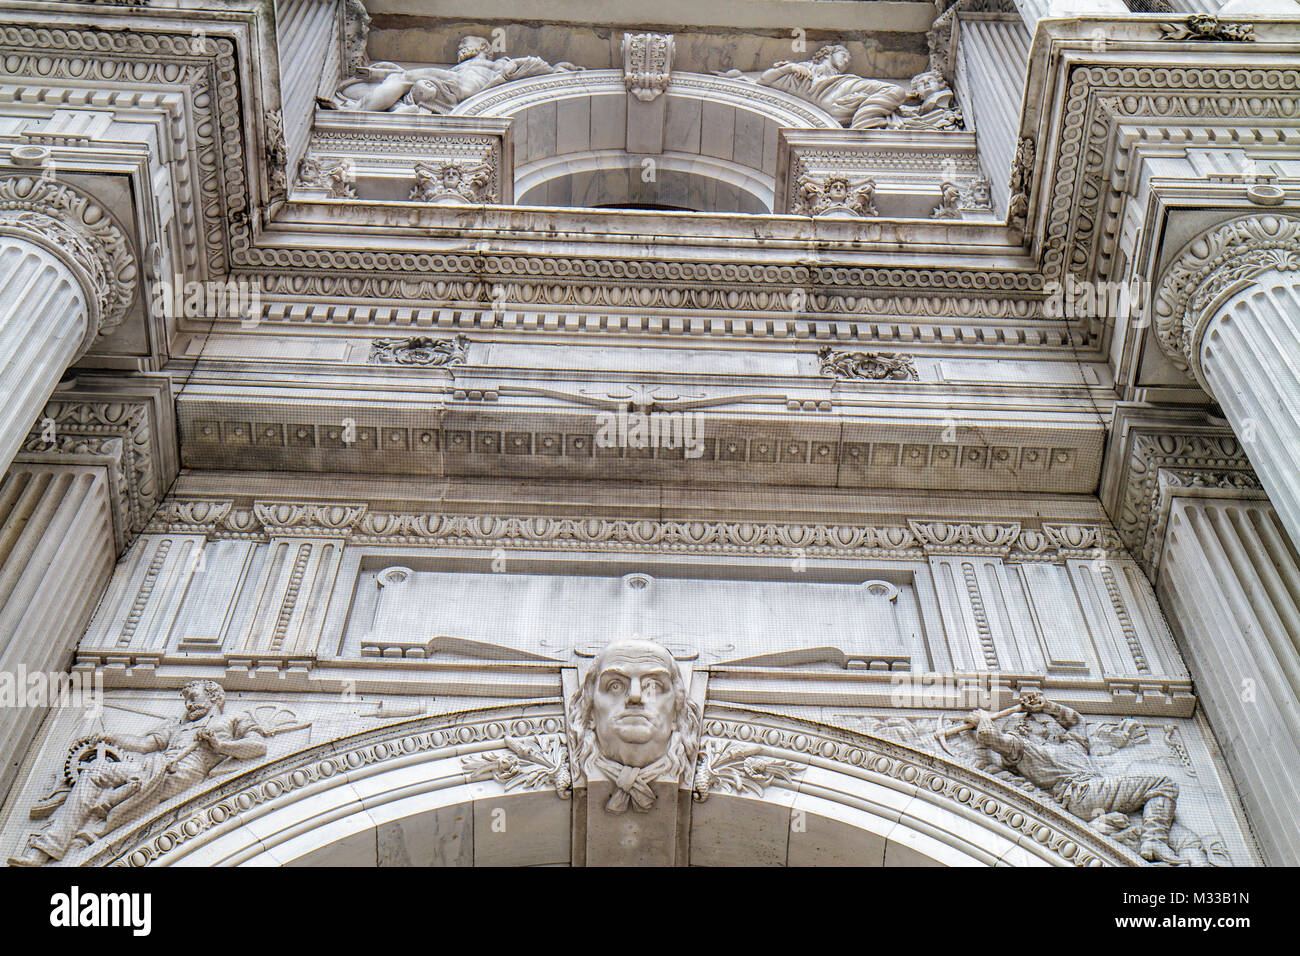 Philadelphia Pennsylvania,Market Street,Penn Square,City Hall,building,public building,Second Empire style,architect John McArthur,bust,Benjamin Frank Stock Photo